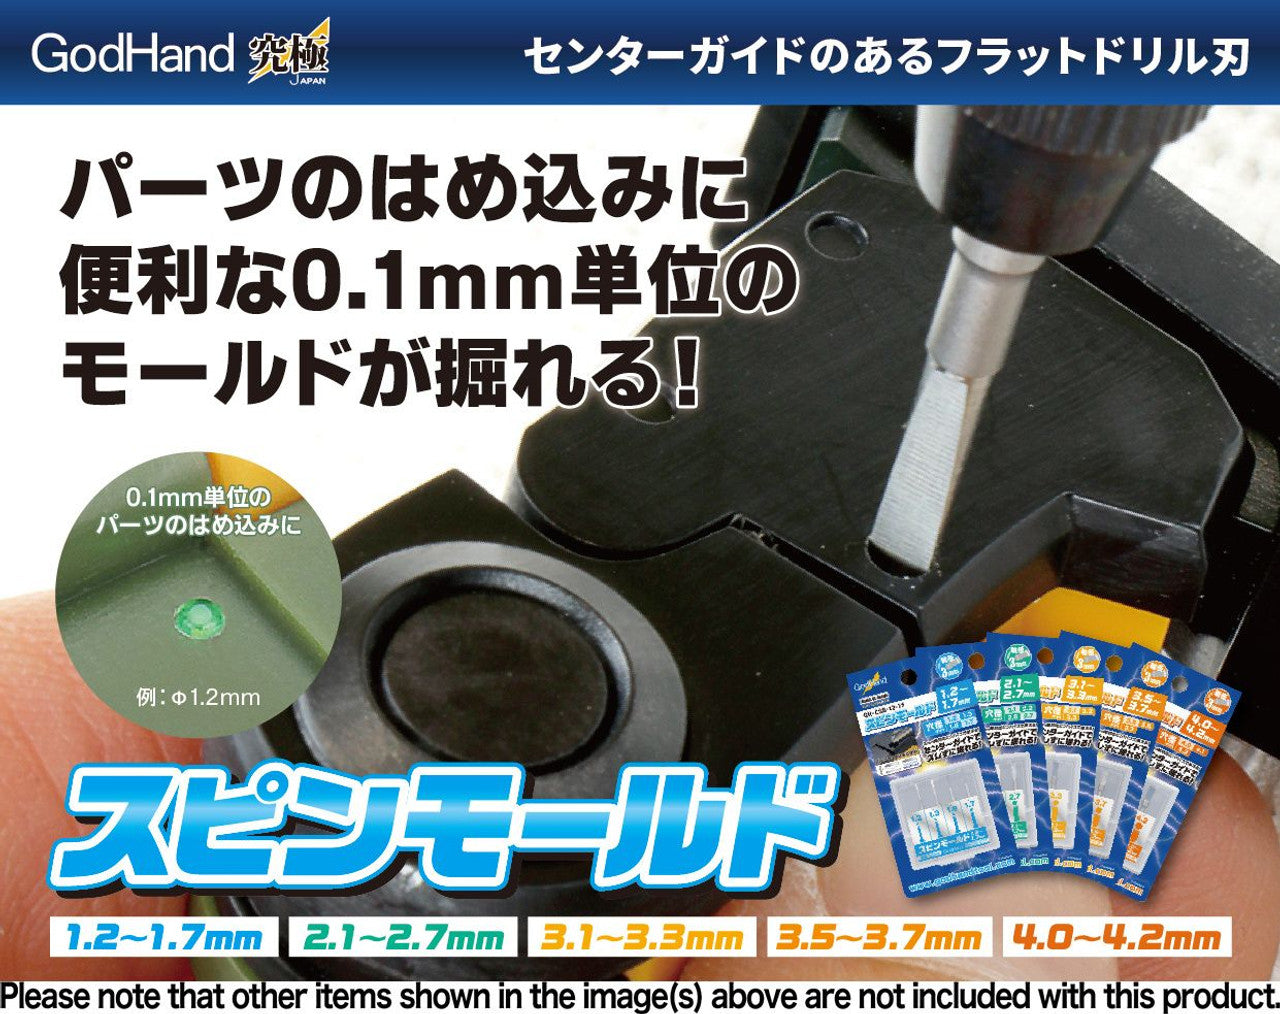 God Hand GH-CSB-40-42 Spin Mold 4.0 - 4.2mm - BanzaiHobby